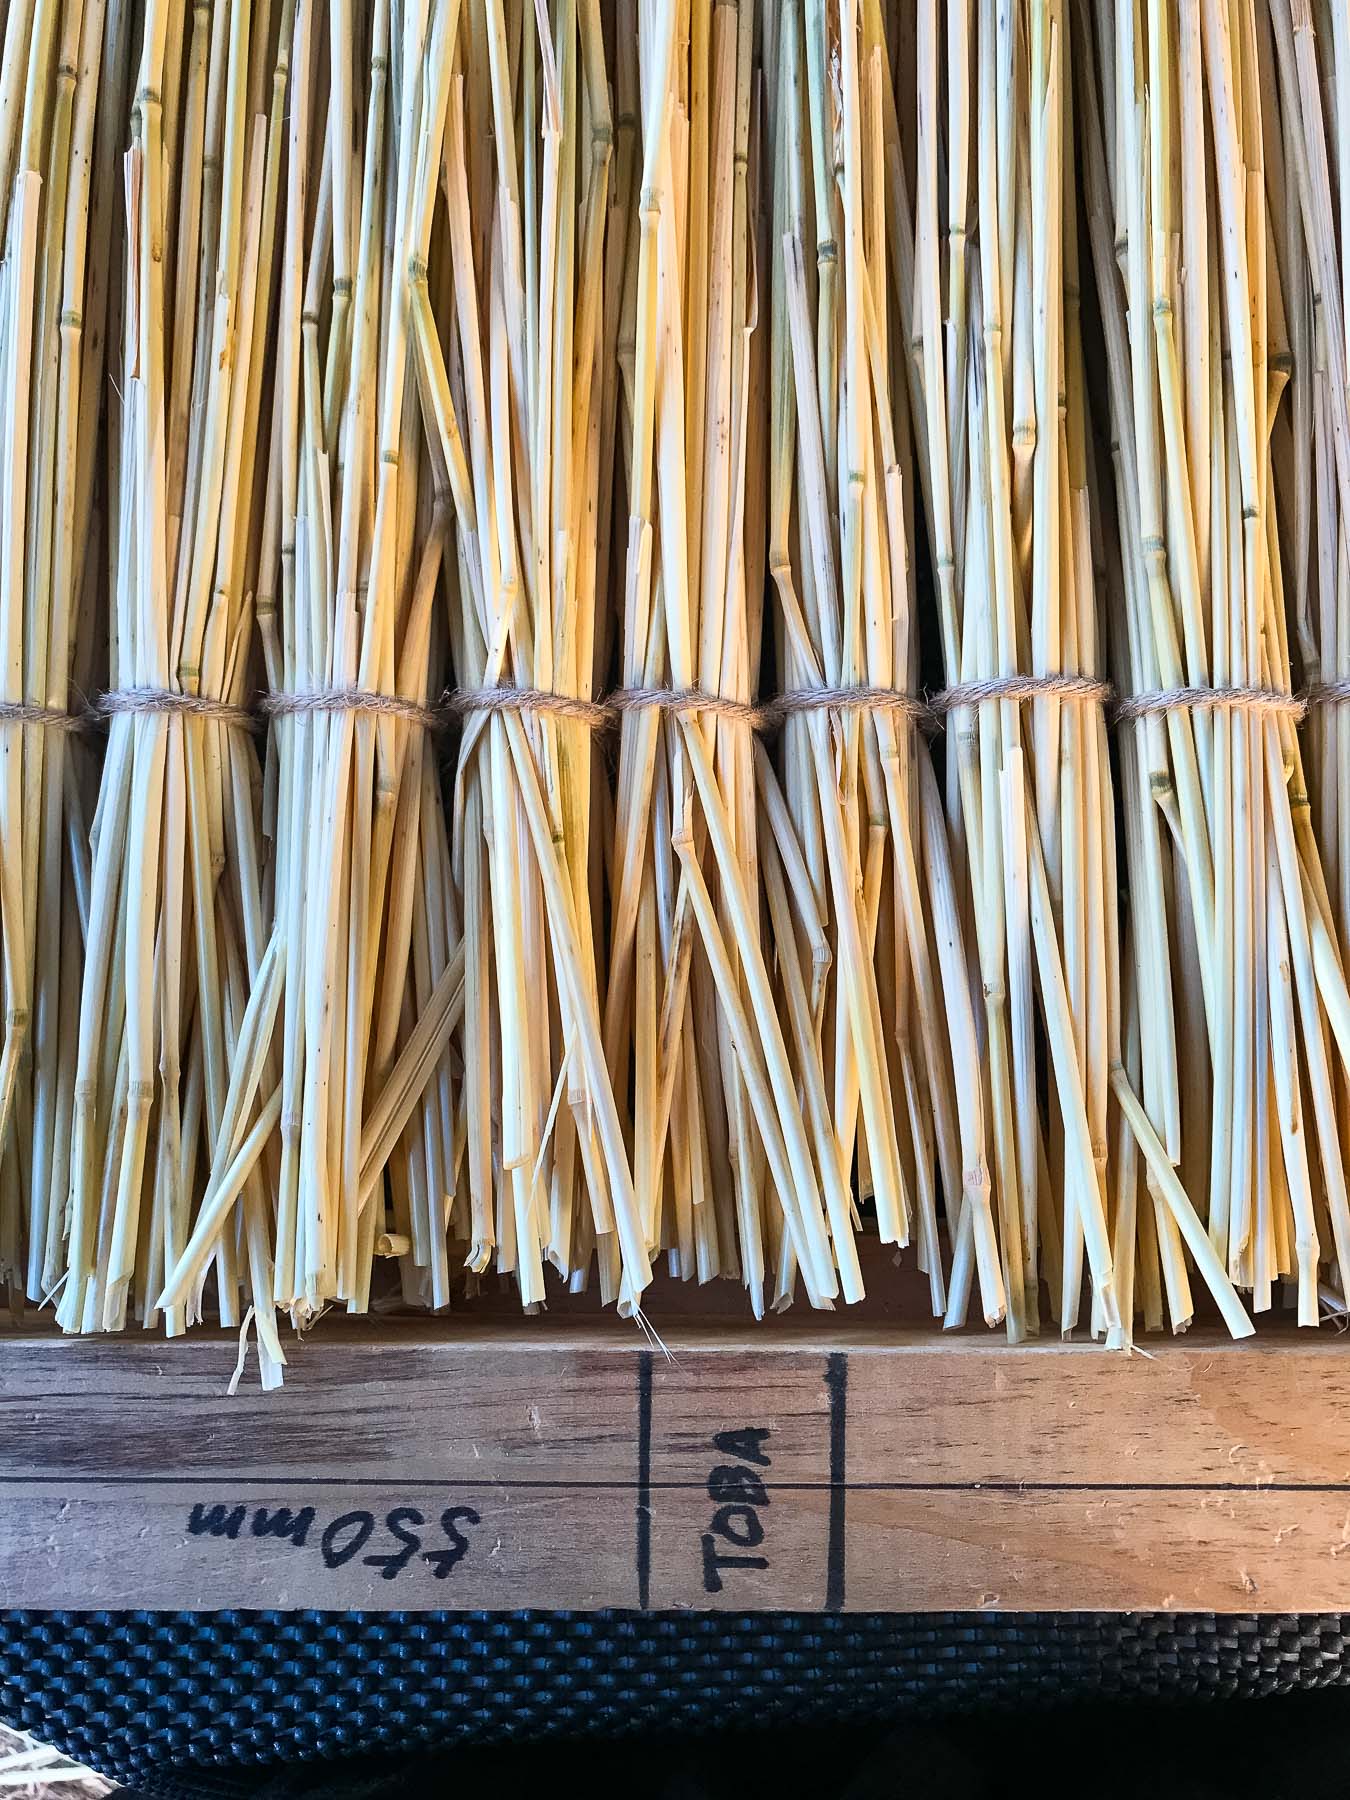 photo of Trimmed wheat stalks on toba weaving frame. Photo by Caro Telfer.